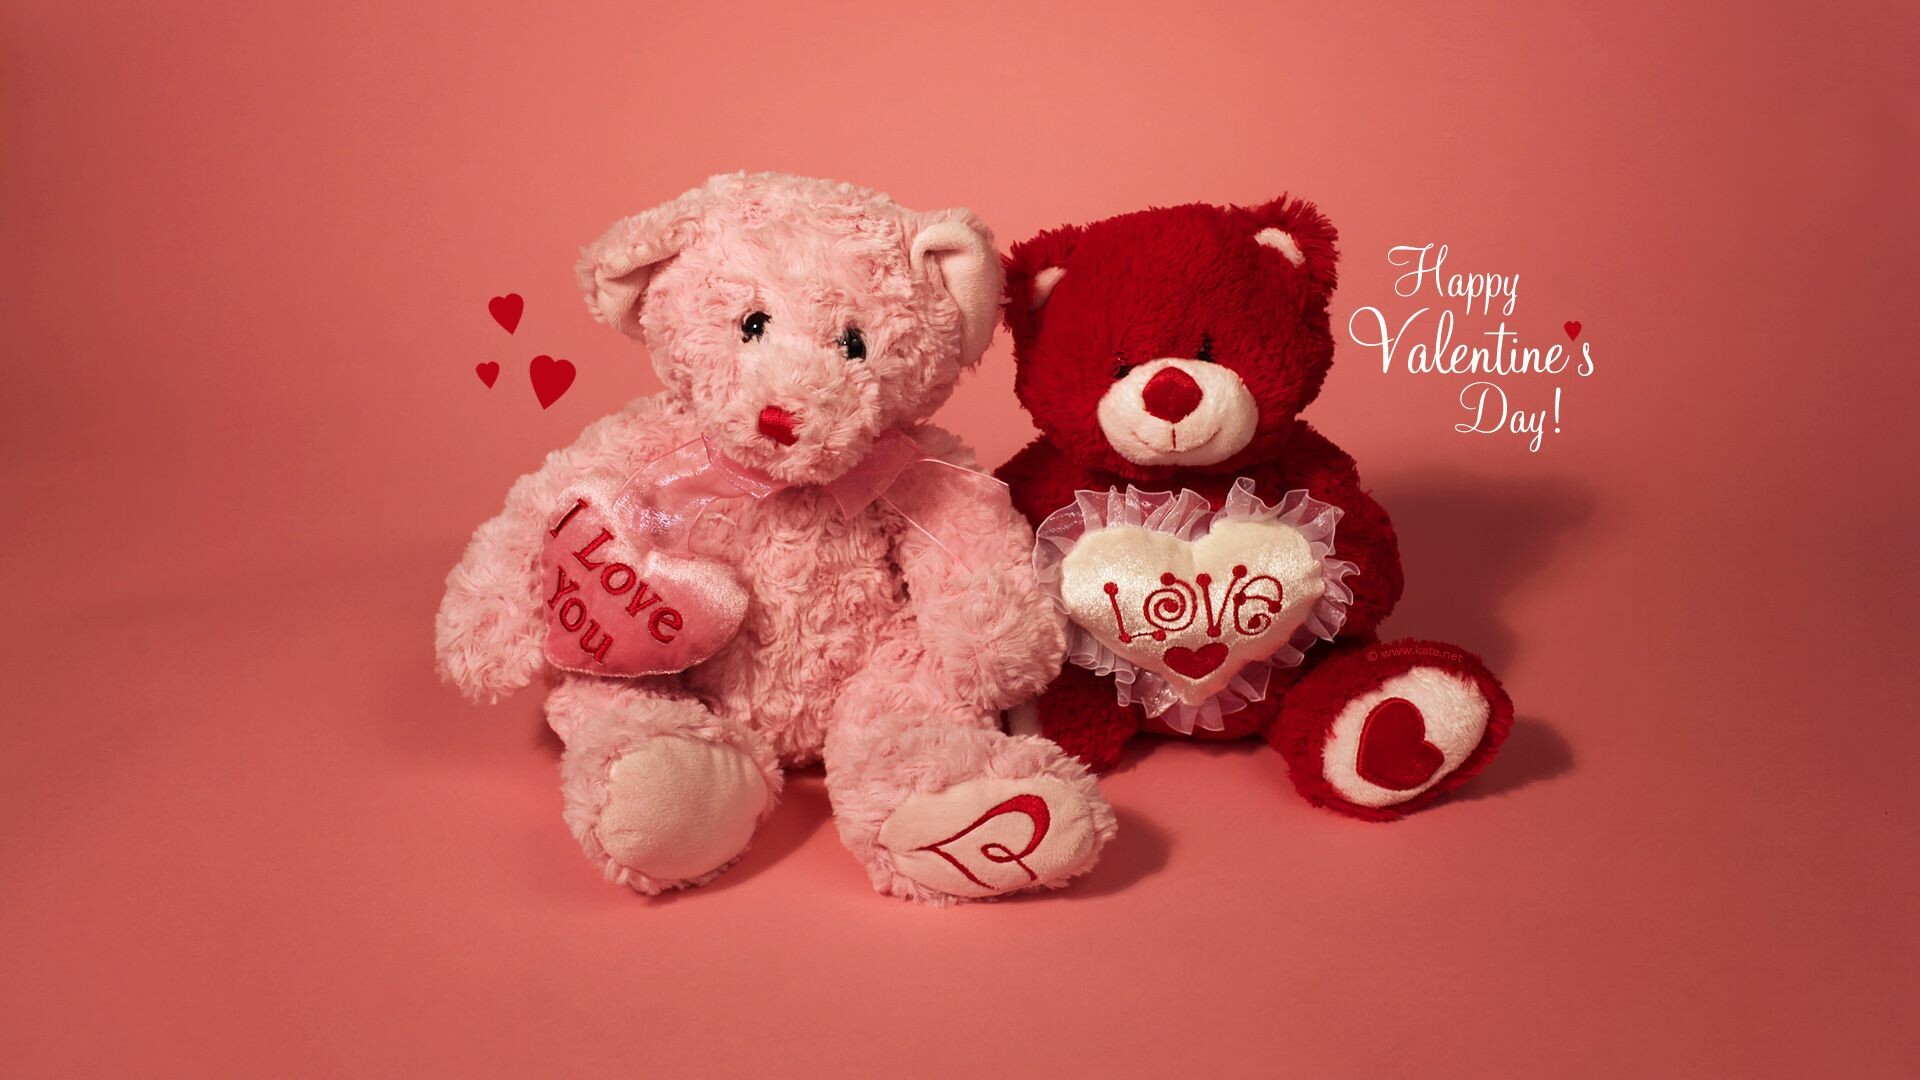 Valentine's Day: A festival of romantic love, Teddy bears. 1920x1080 Full HD Wallpaper.